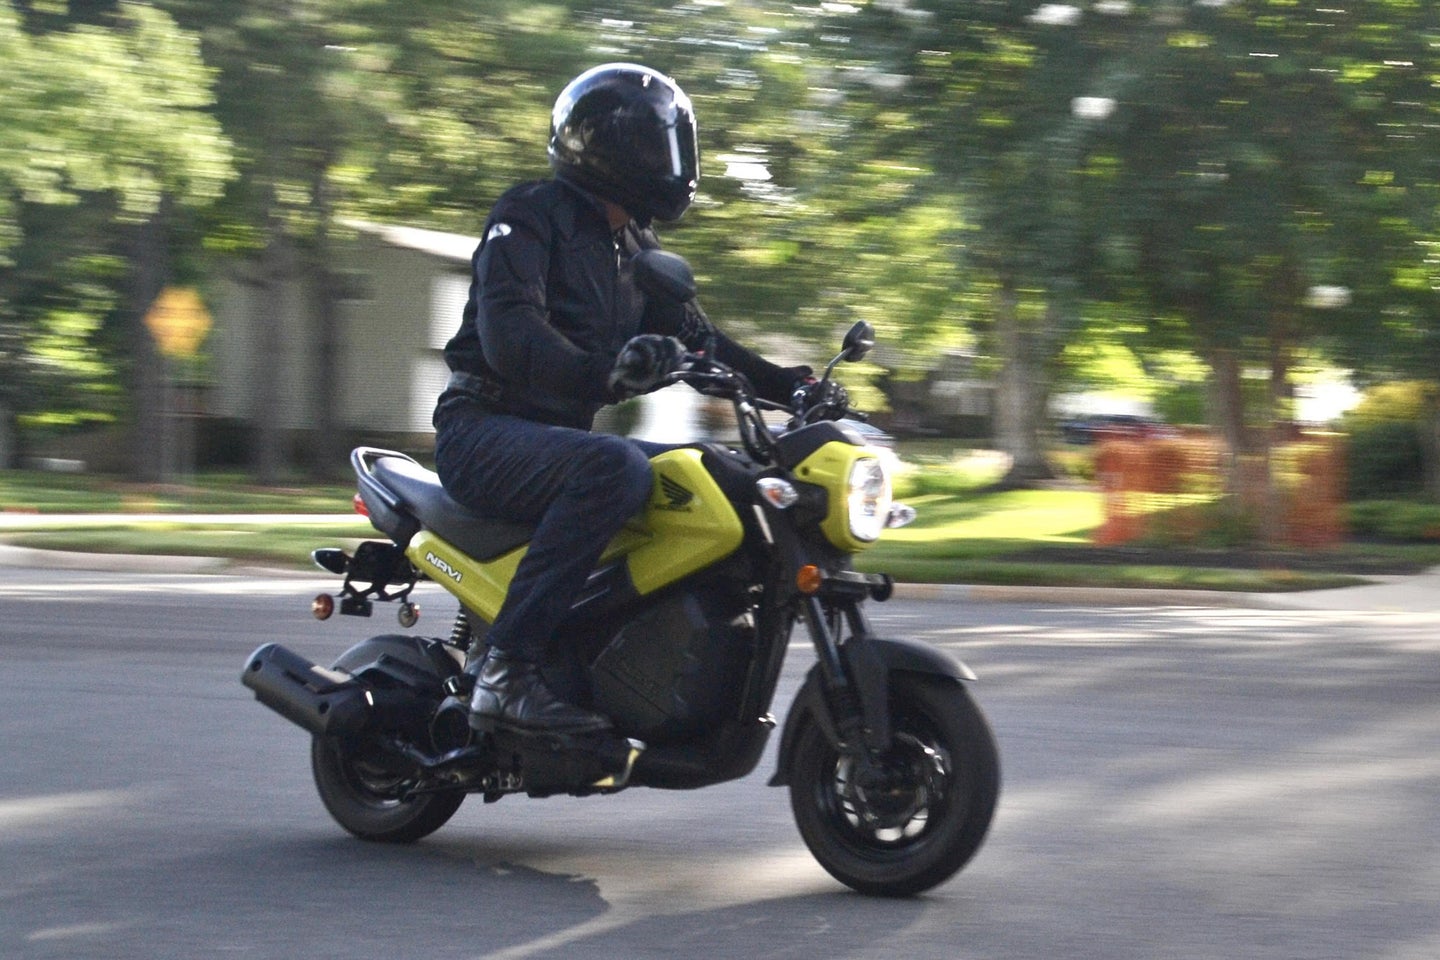 a rider on a small Honda motorcycle